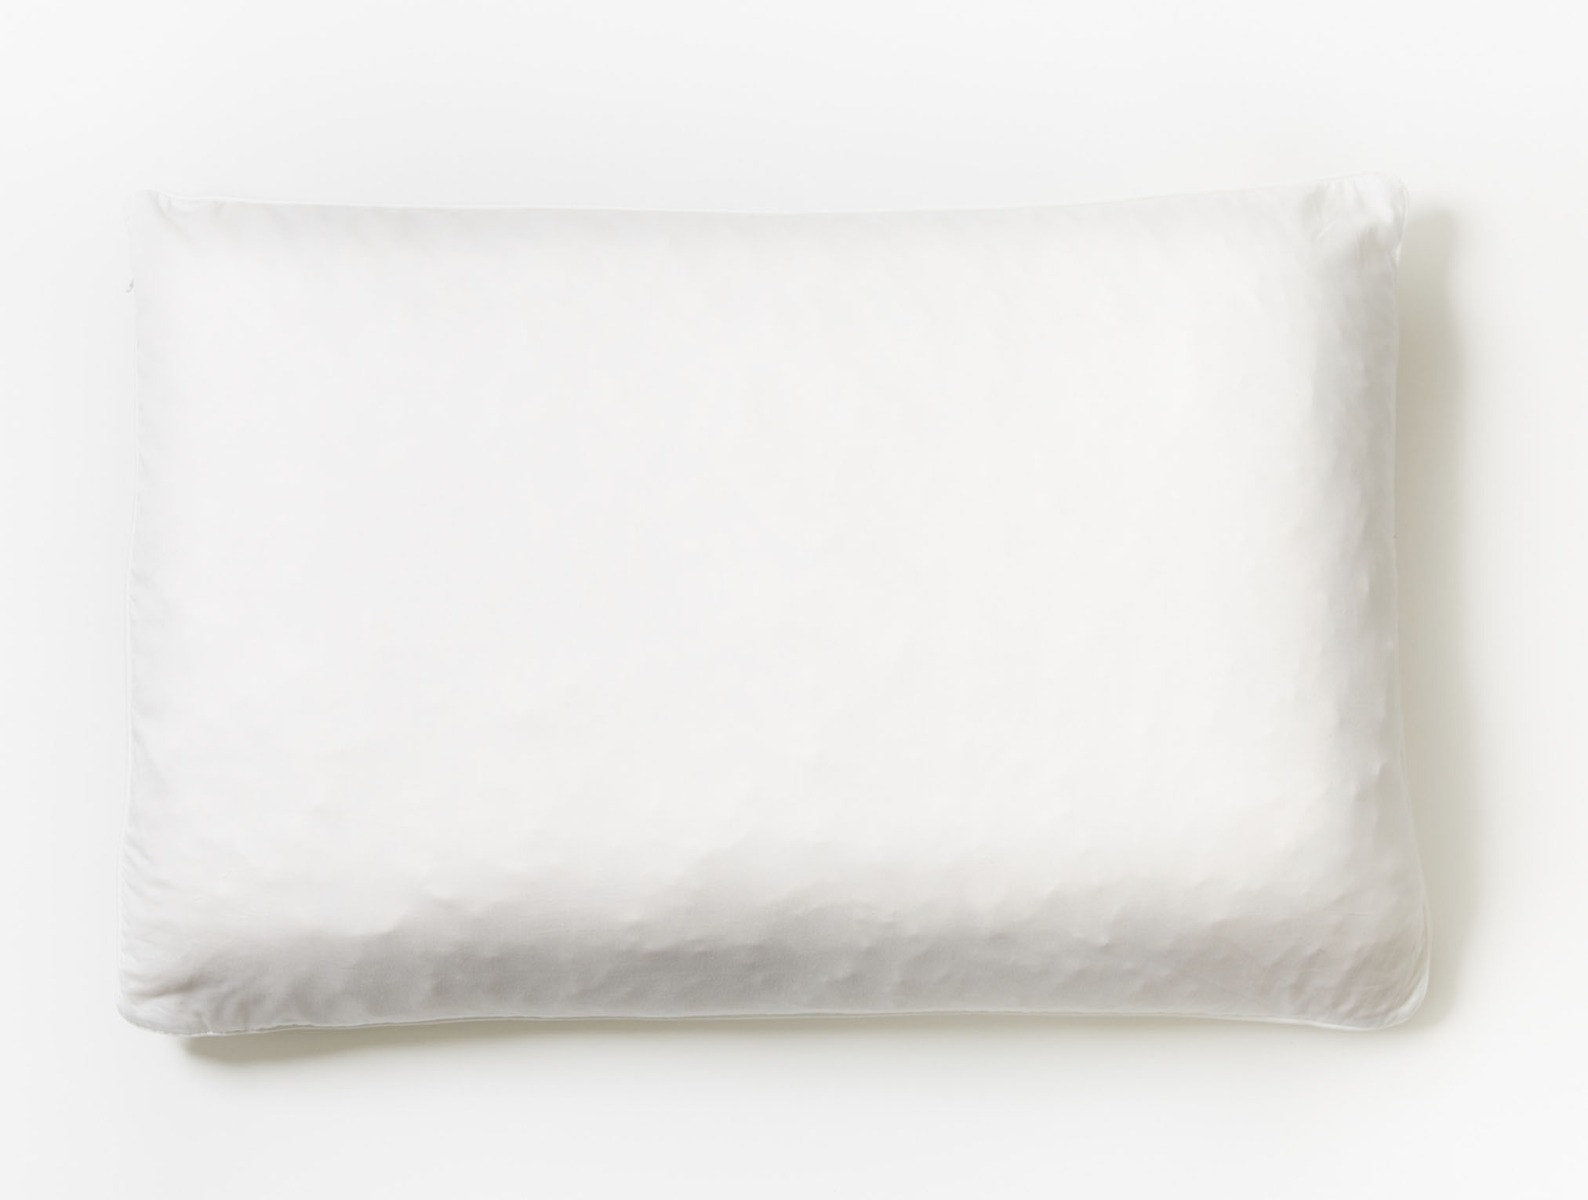 Organic Shredded Latex Pillow 